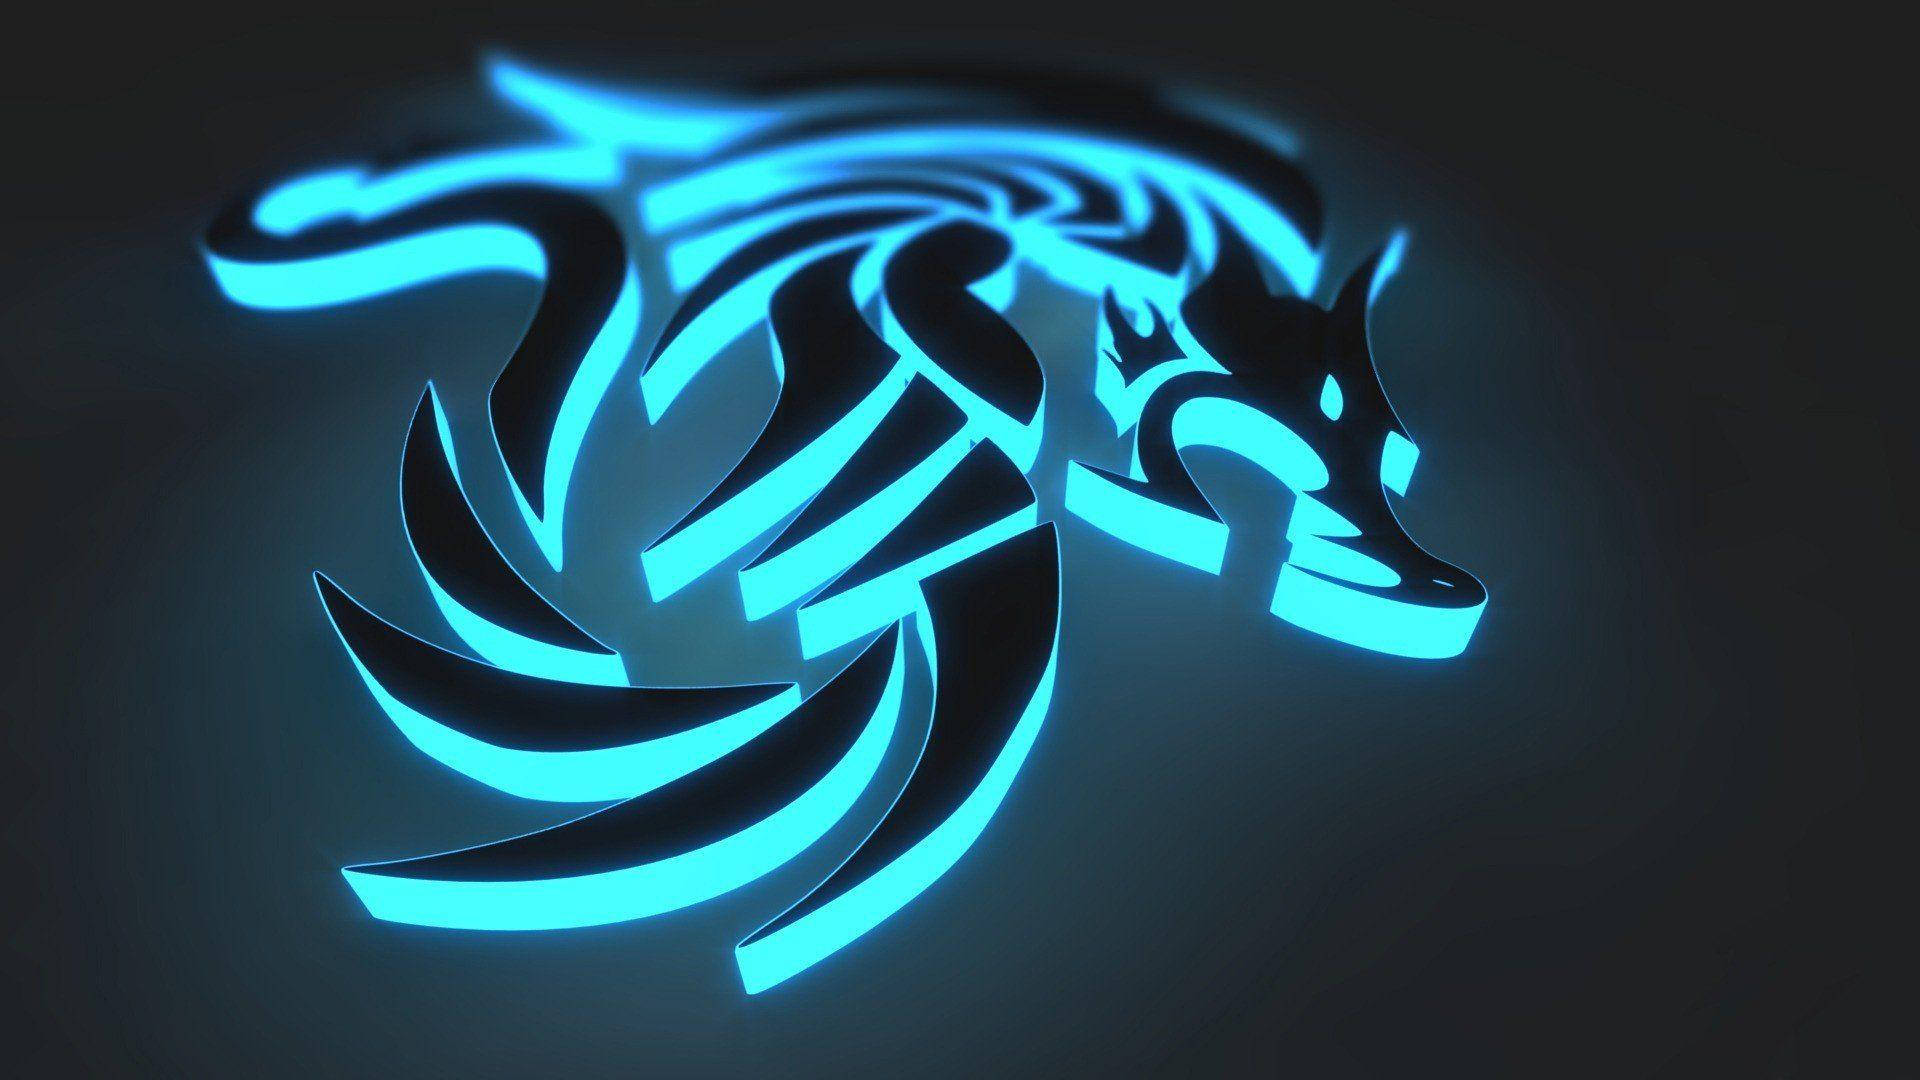 Cool Logos 3d Dragon